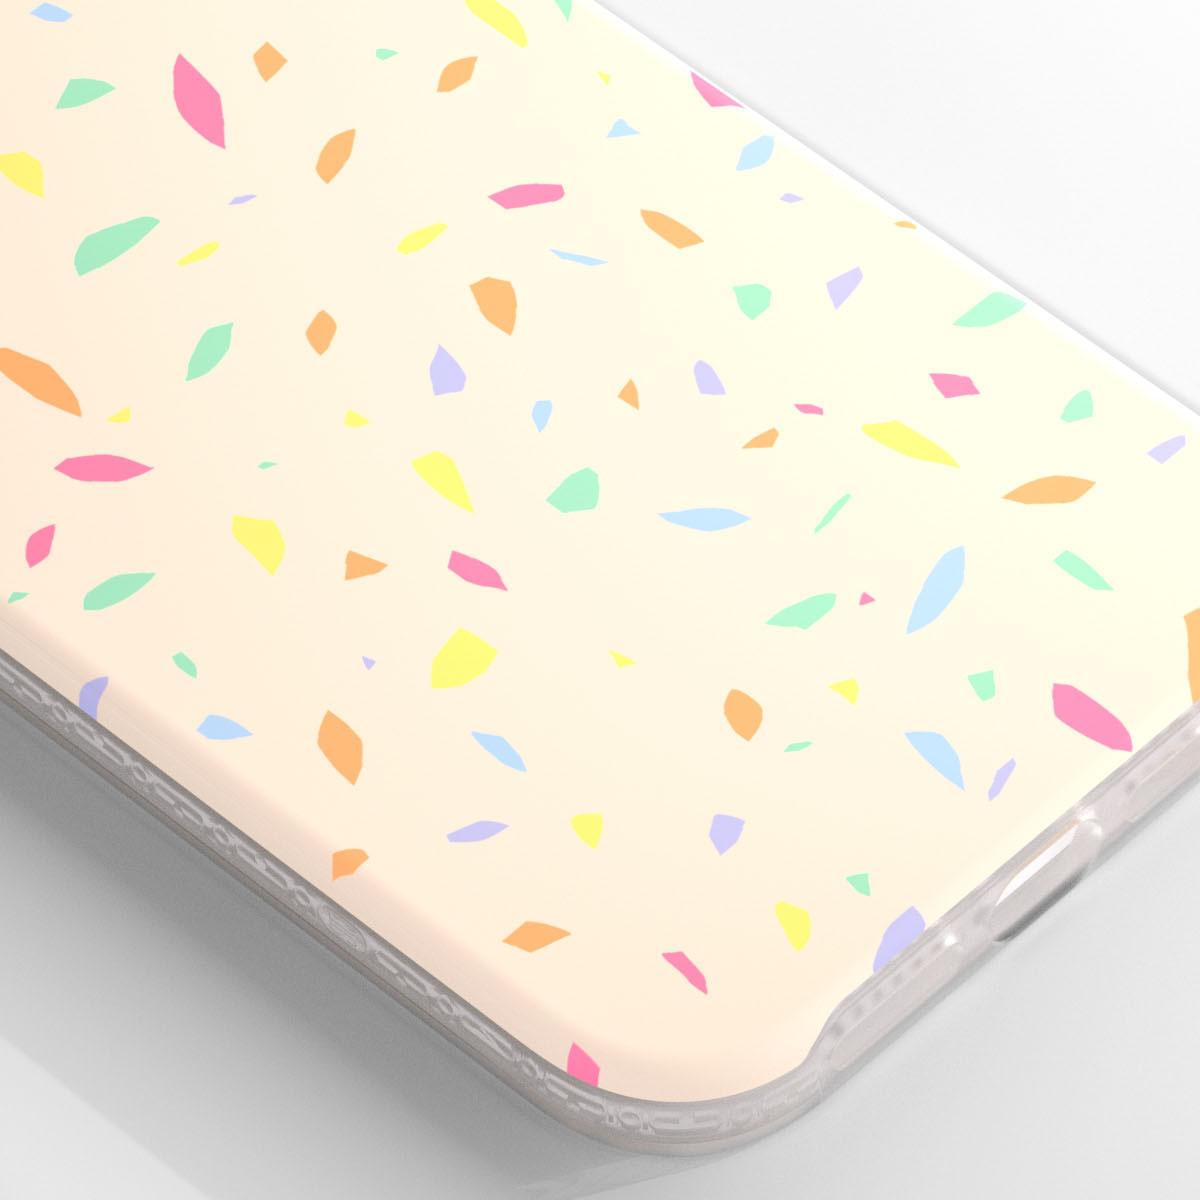 iPhone 12 Whimsy Confetti Phone Case - CORECOLOUR